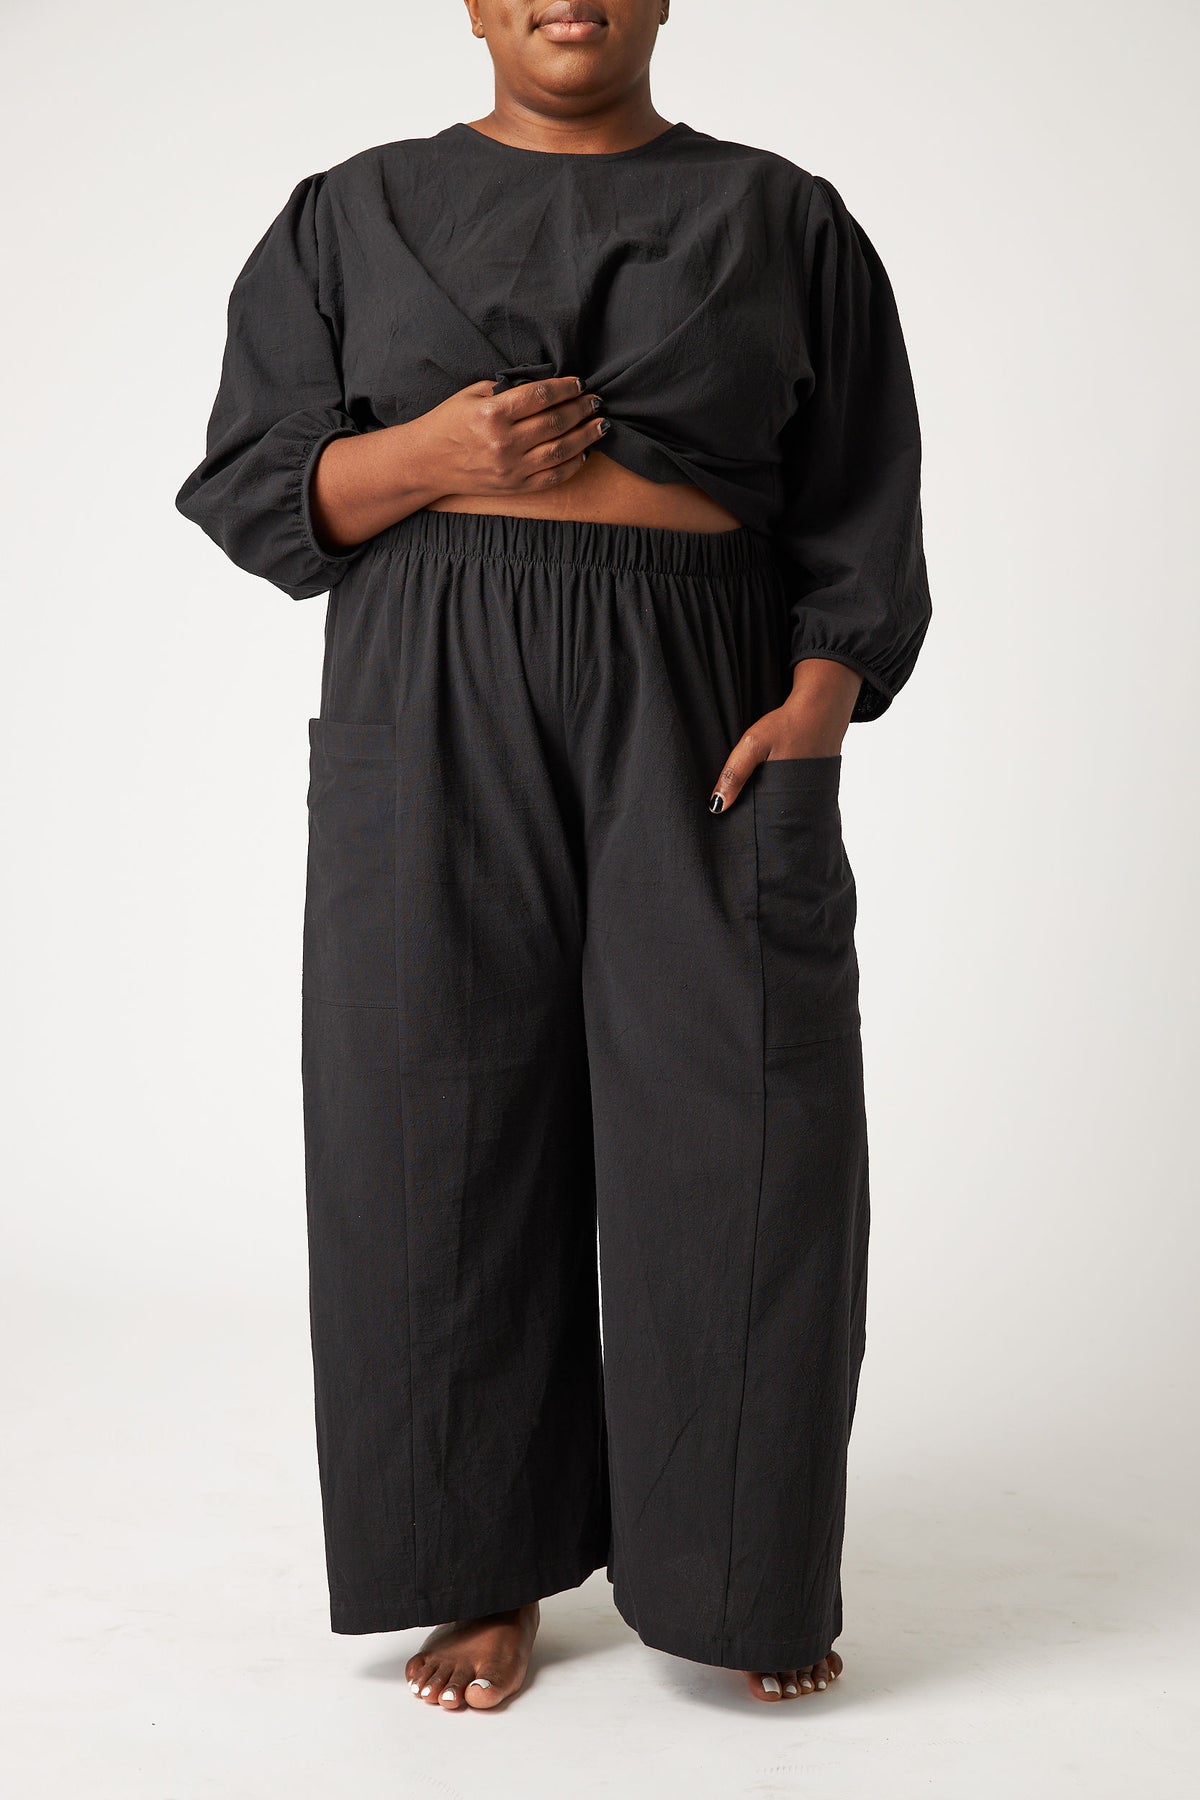 Black History Month Peace Sign Modal Loungewear Knit Fabric by Joann